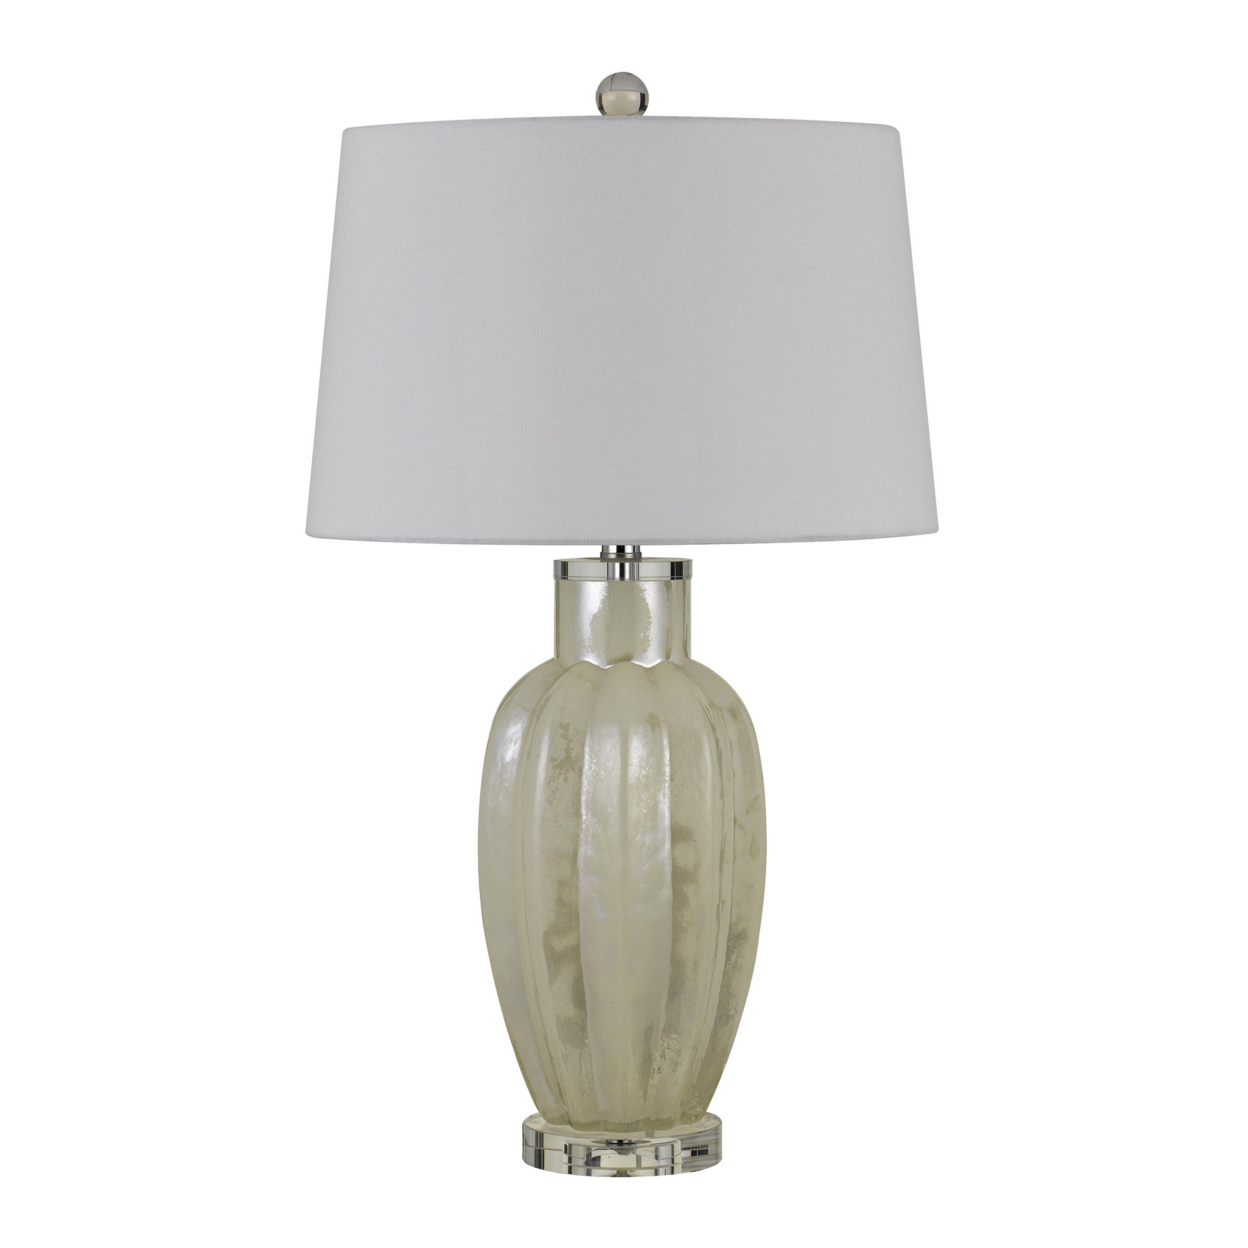 Glass Table Lamp With Round Hardback Fabric Shade, White- Saltoro Sherpi